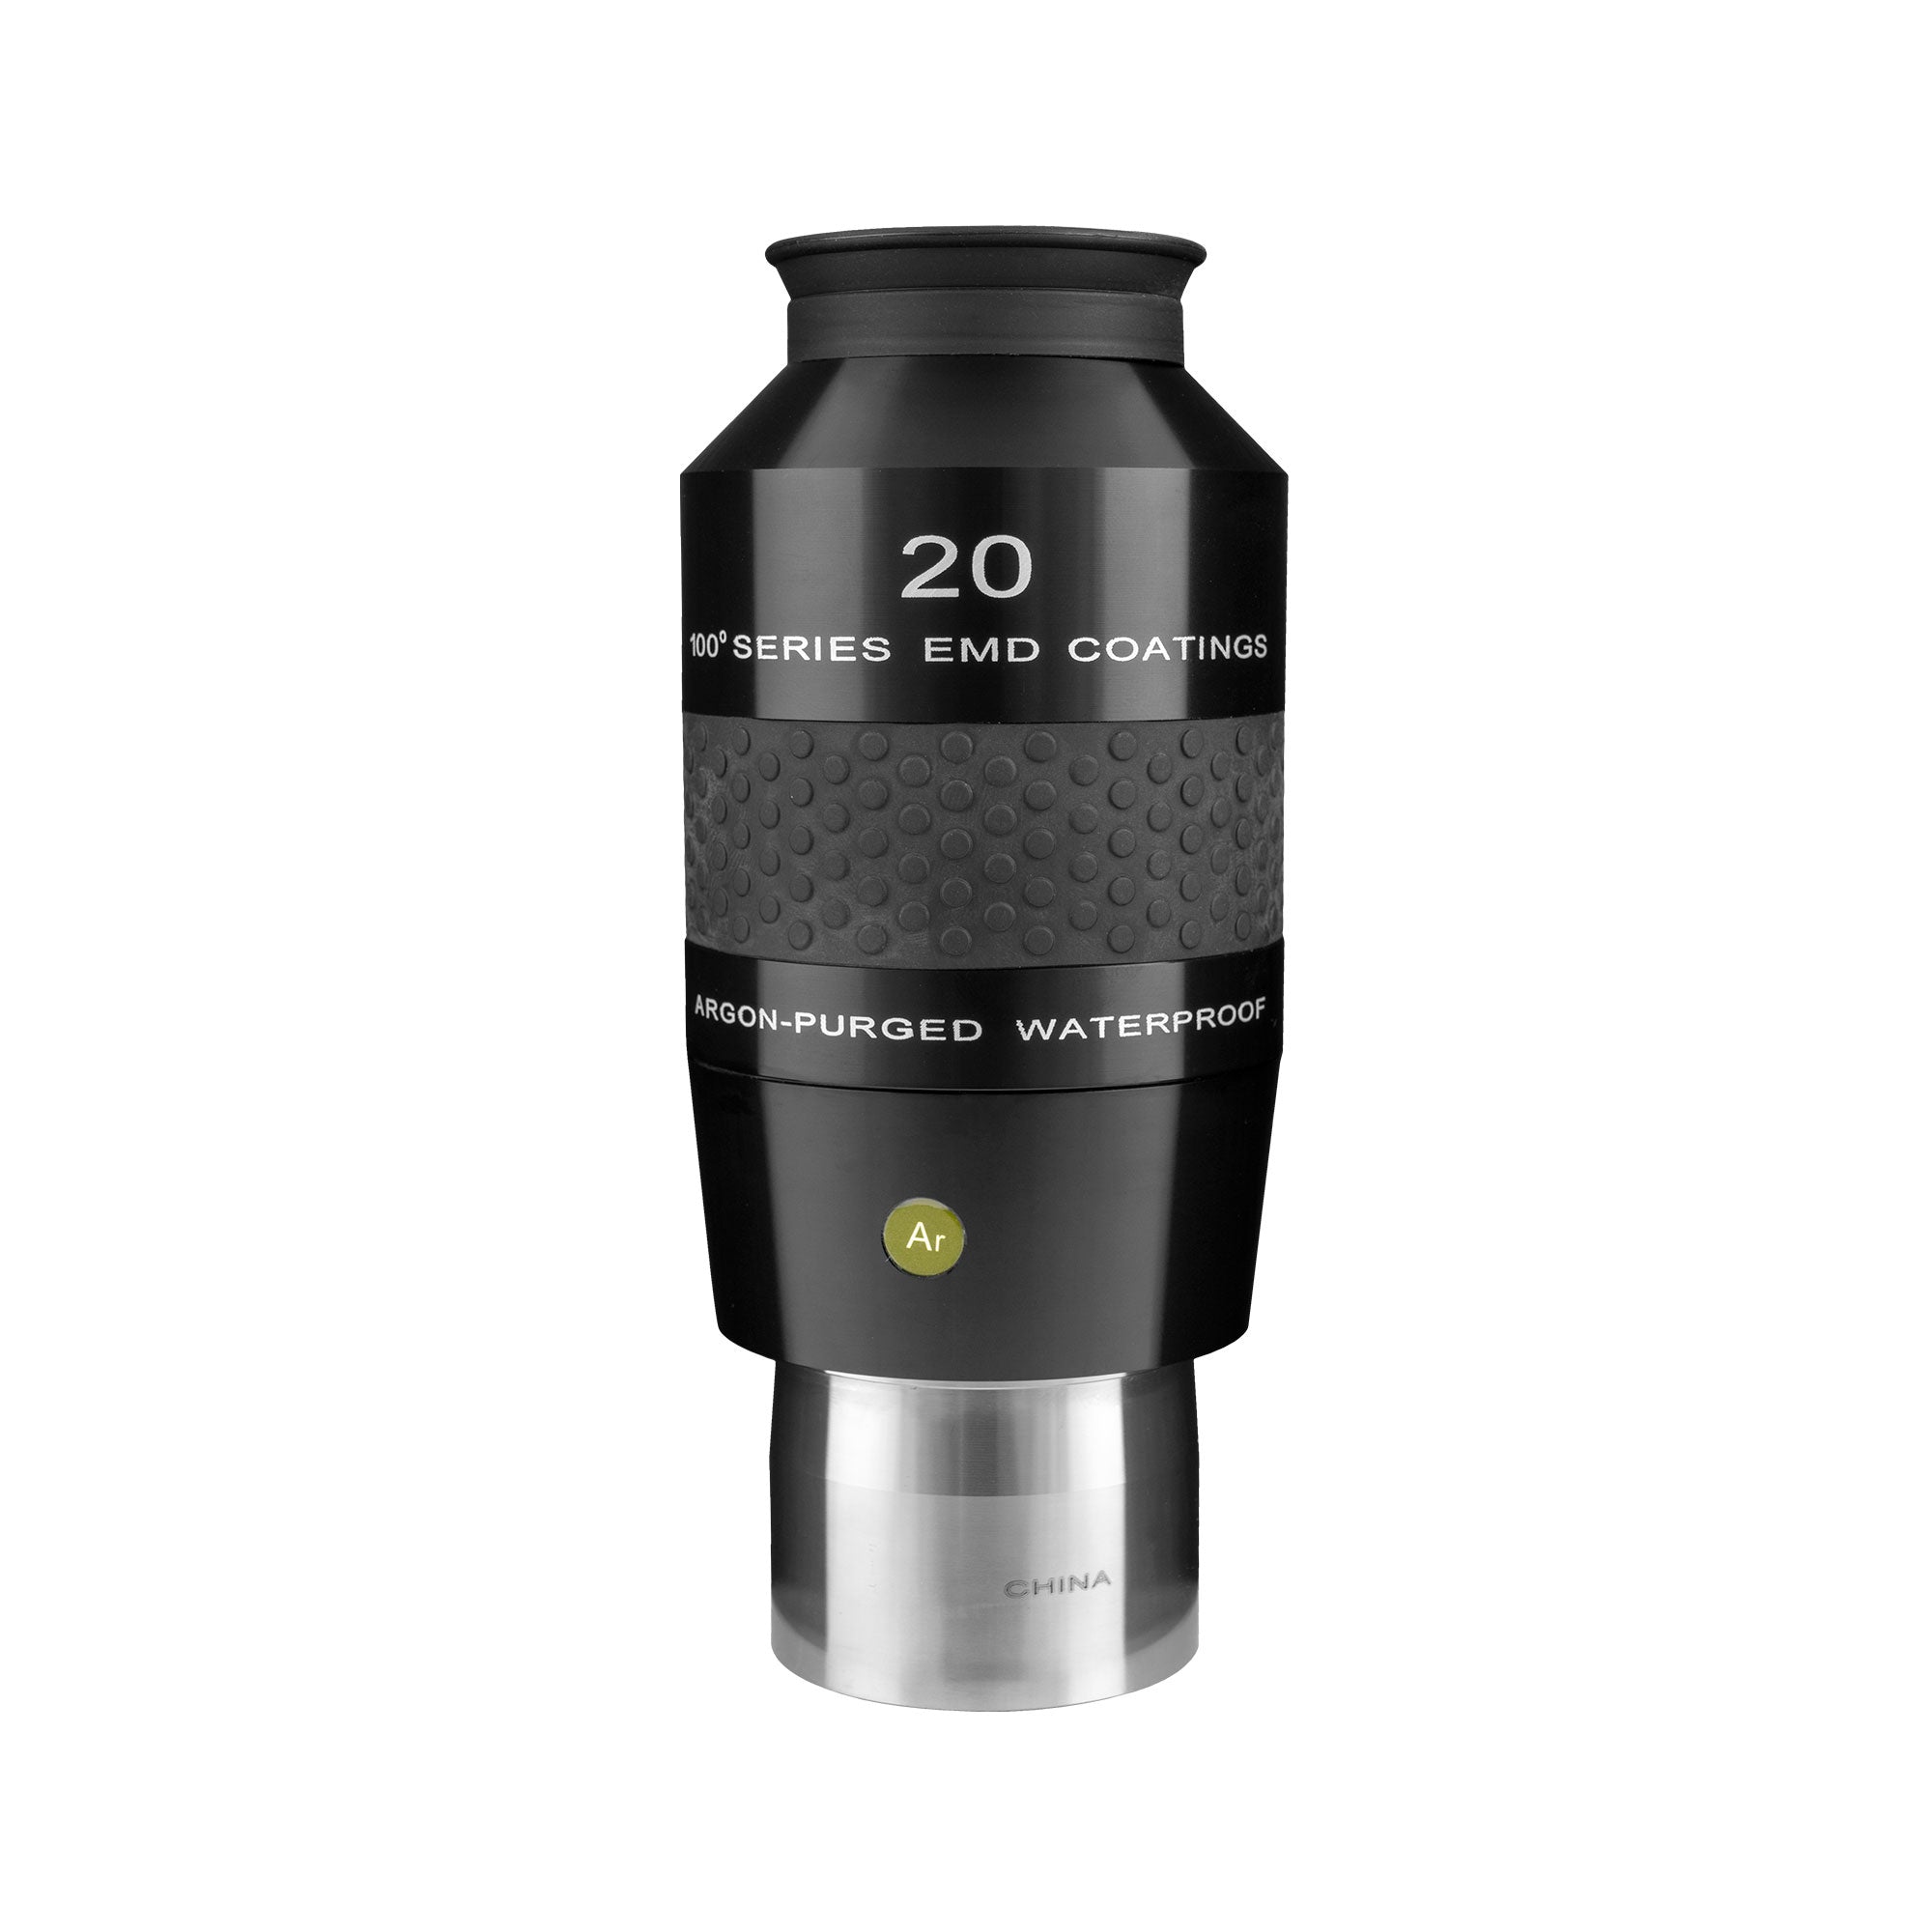 Explore Scientific 100° 20mm Waterproof Eyepiece - EPWP10020-01